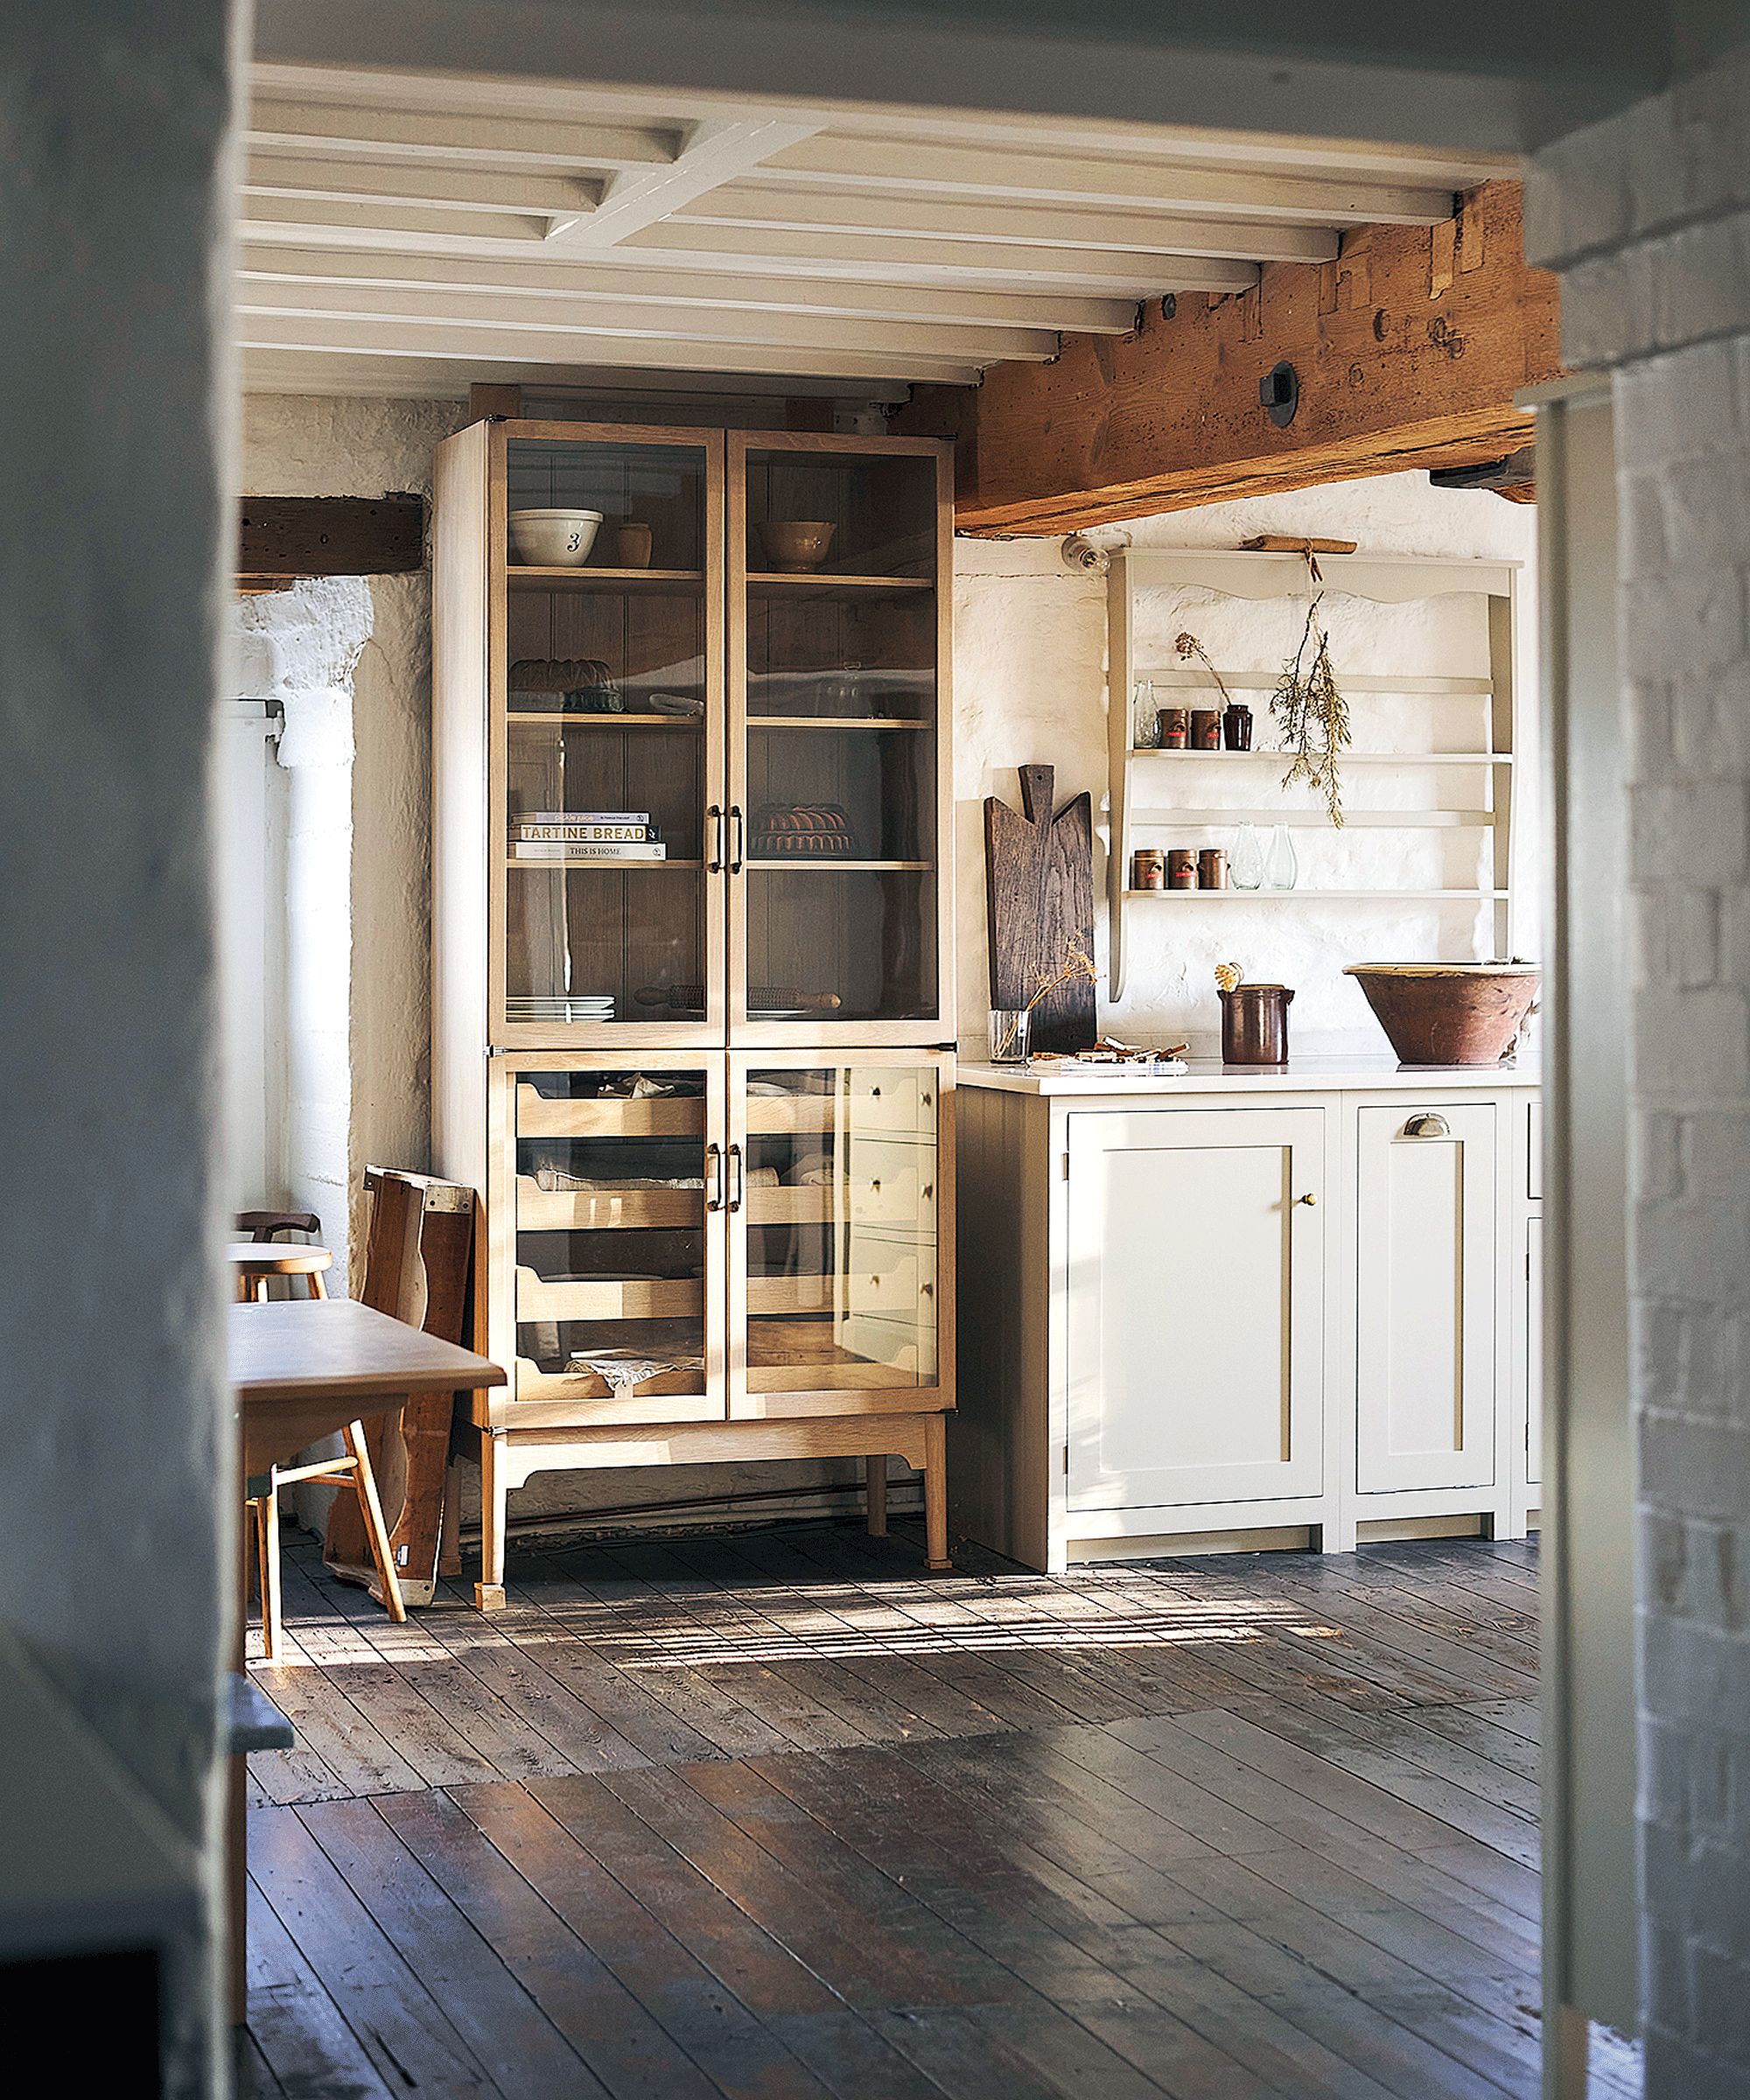 A glass freestanding kitchen cabinet in a kitchen with dark floor boards